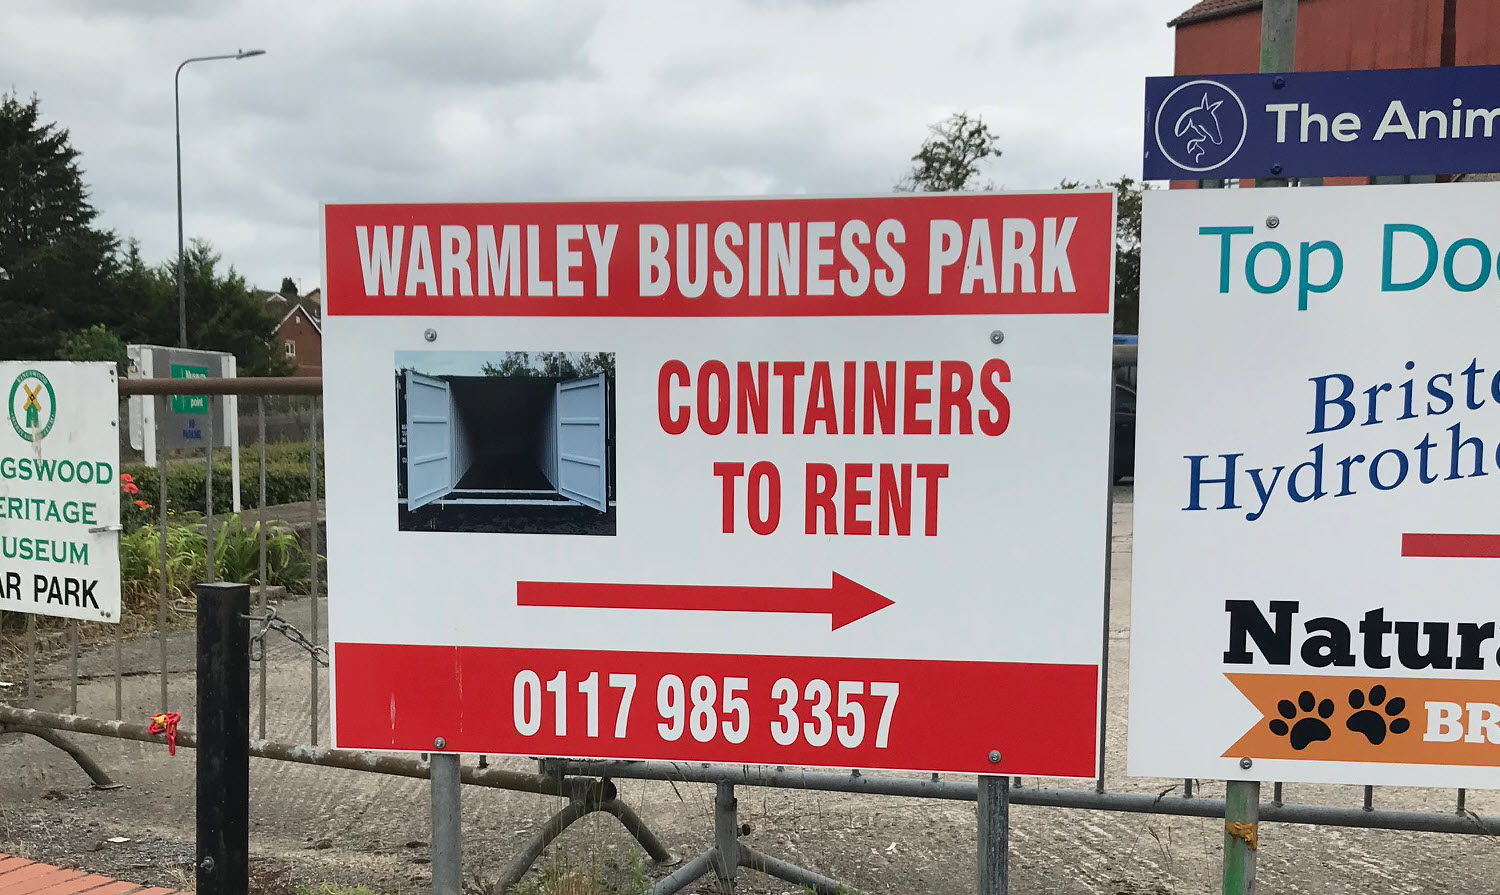 Warmley Business Park